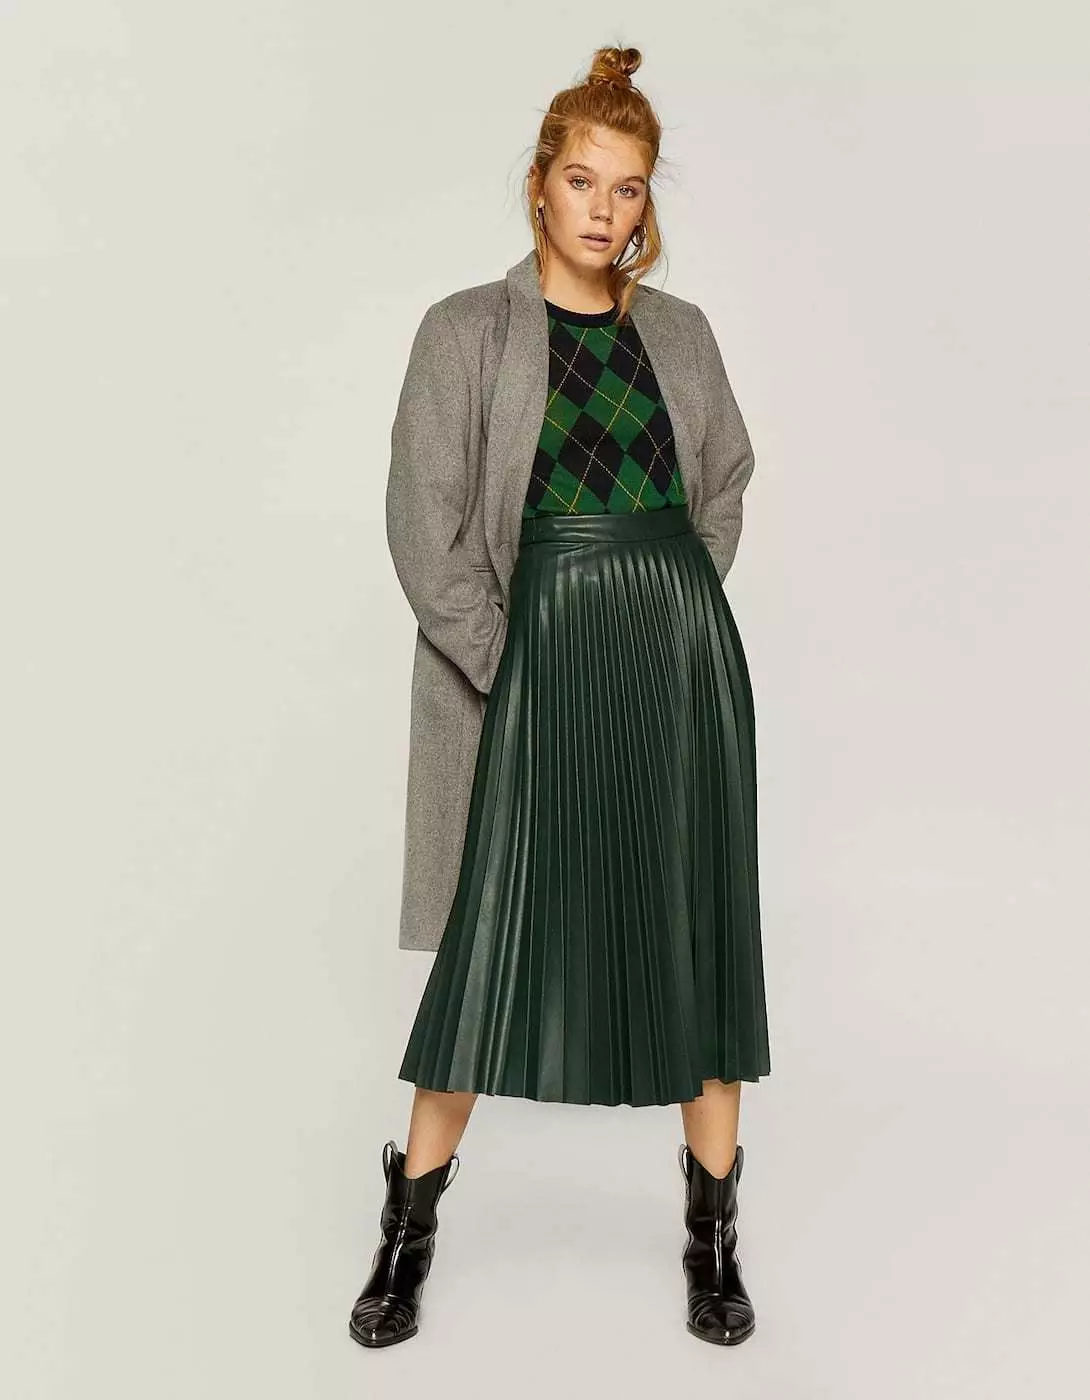 Plears Skirt Kulit: Apa yang Harus Kenakan Rok Eco-Piece Lipit? Gambar dengan rok kulit tiruan hitam dan coklat 800_2